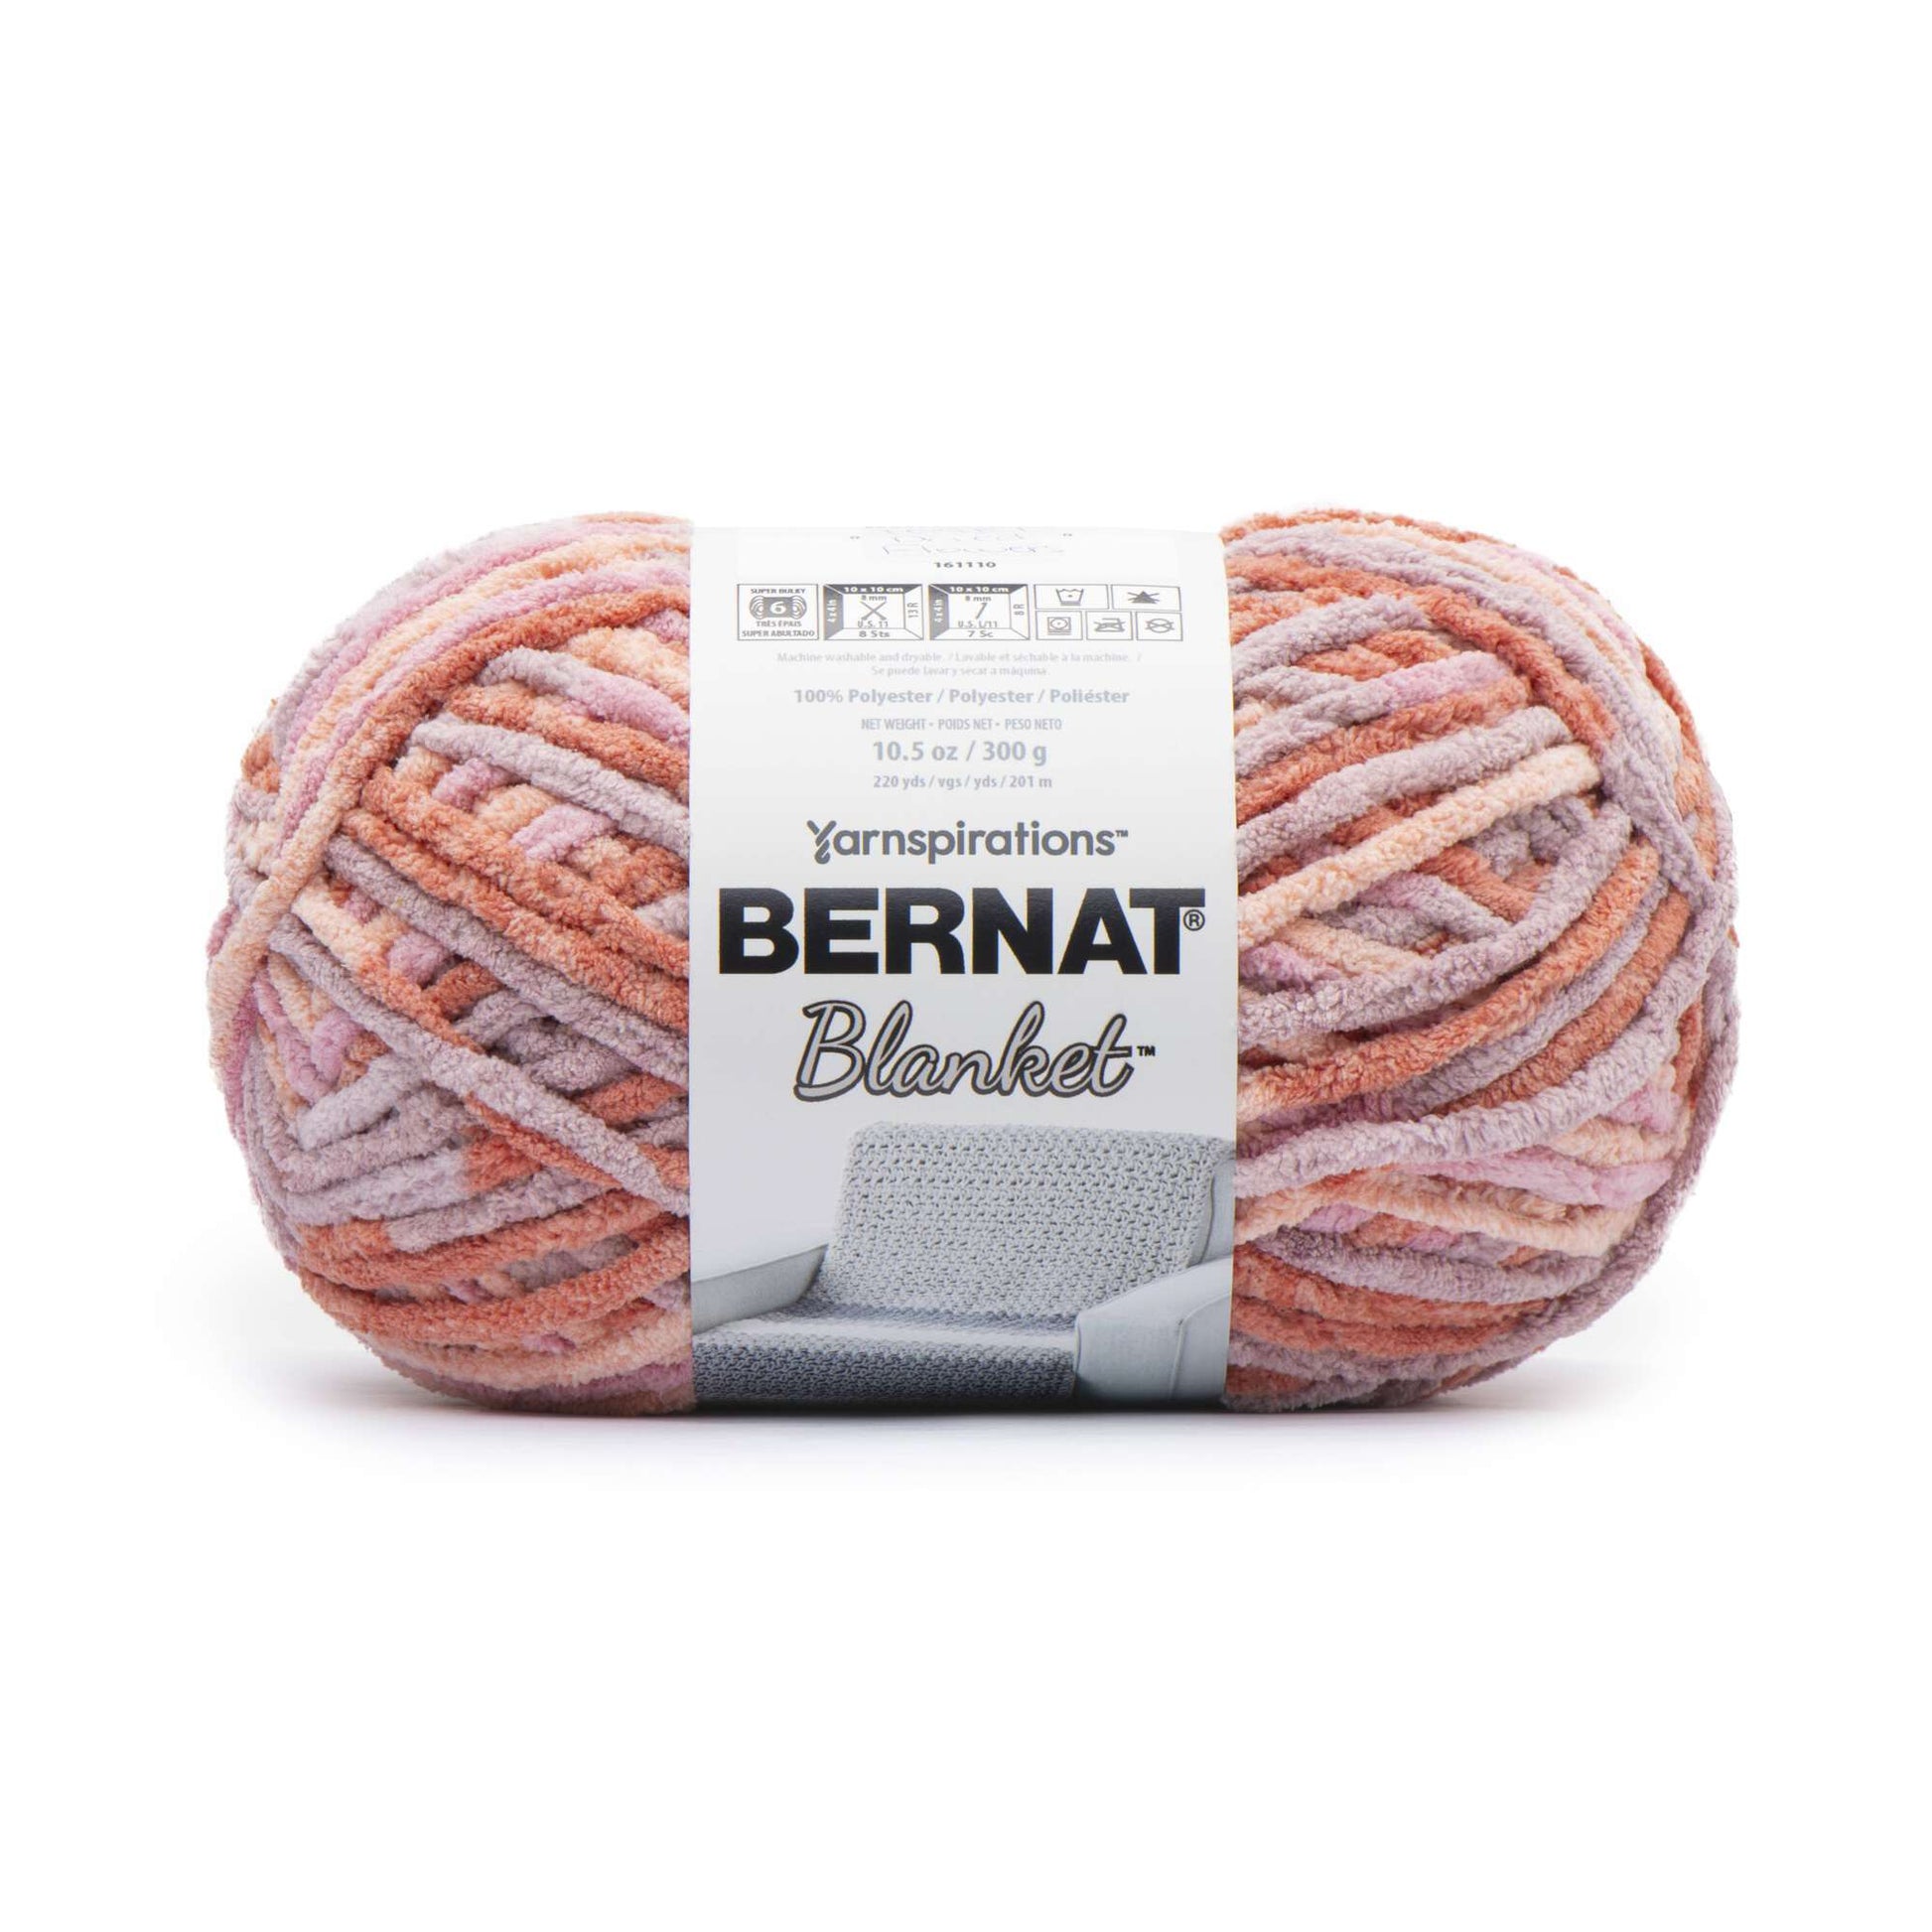 Bernat Blanket Yarn (300g/10.5oz) Dried Flowers